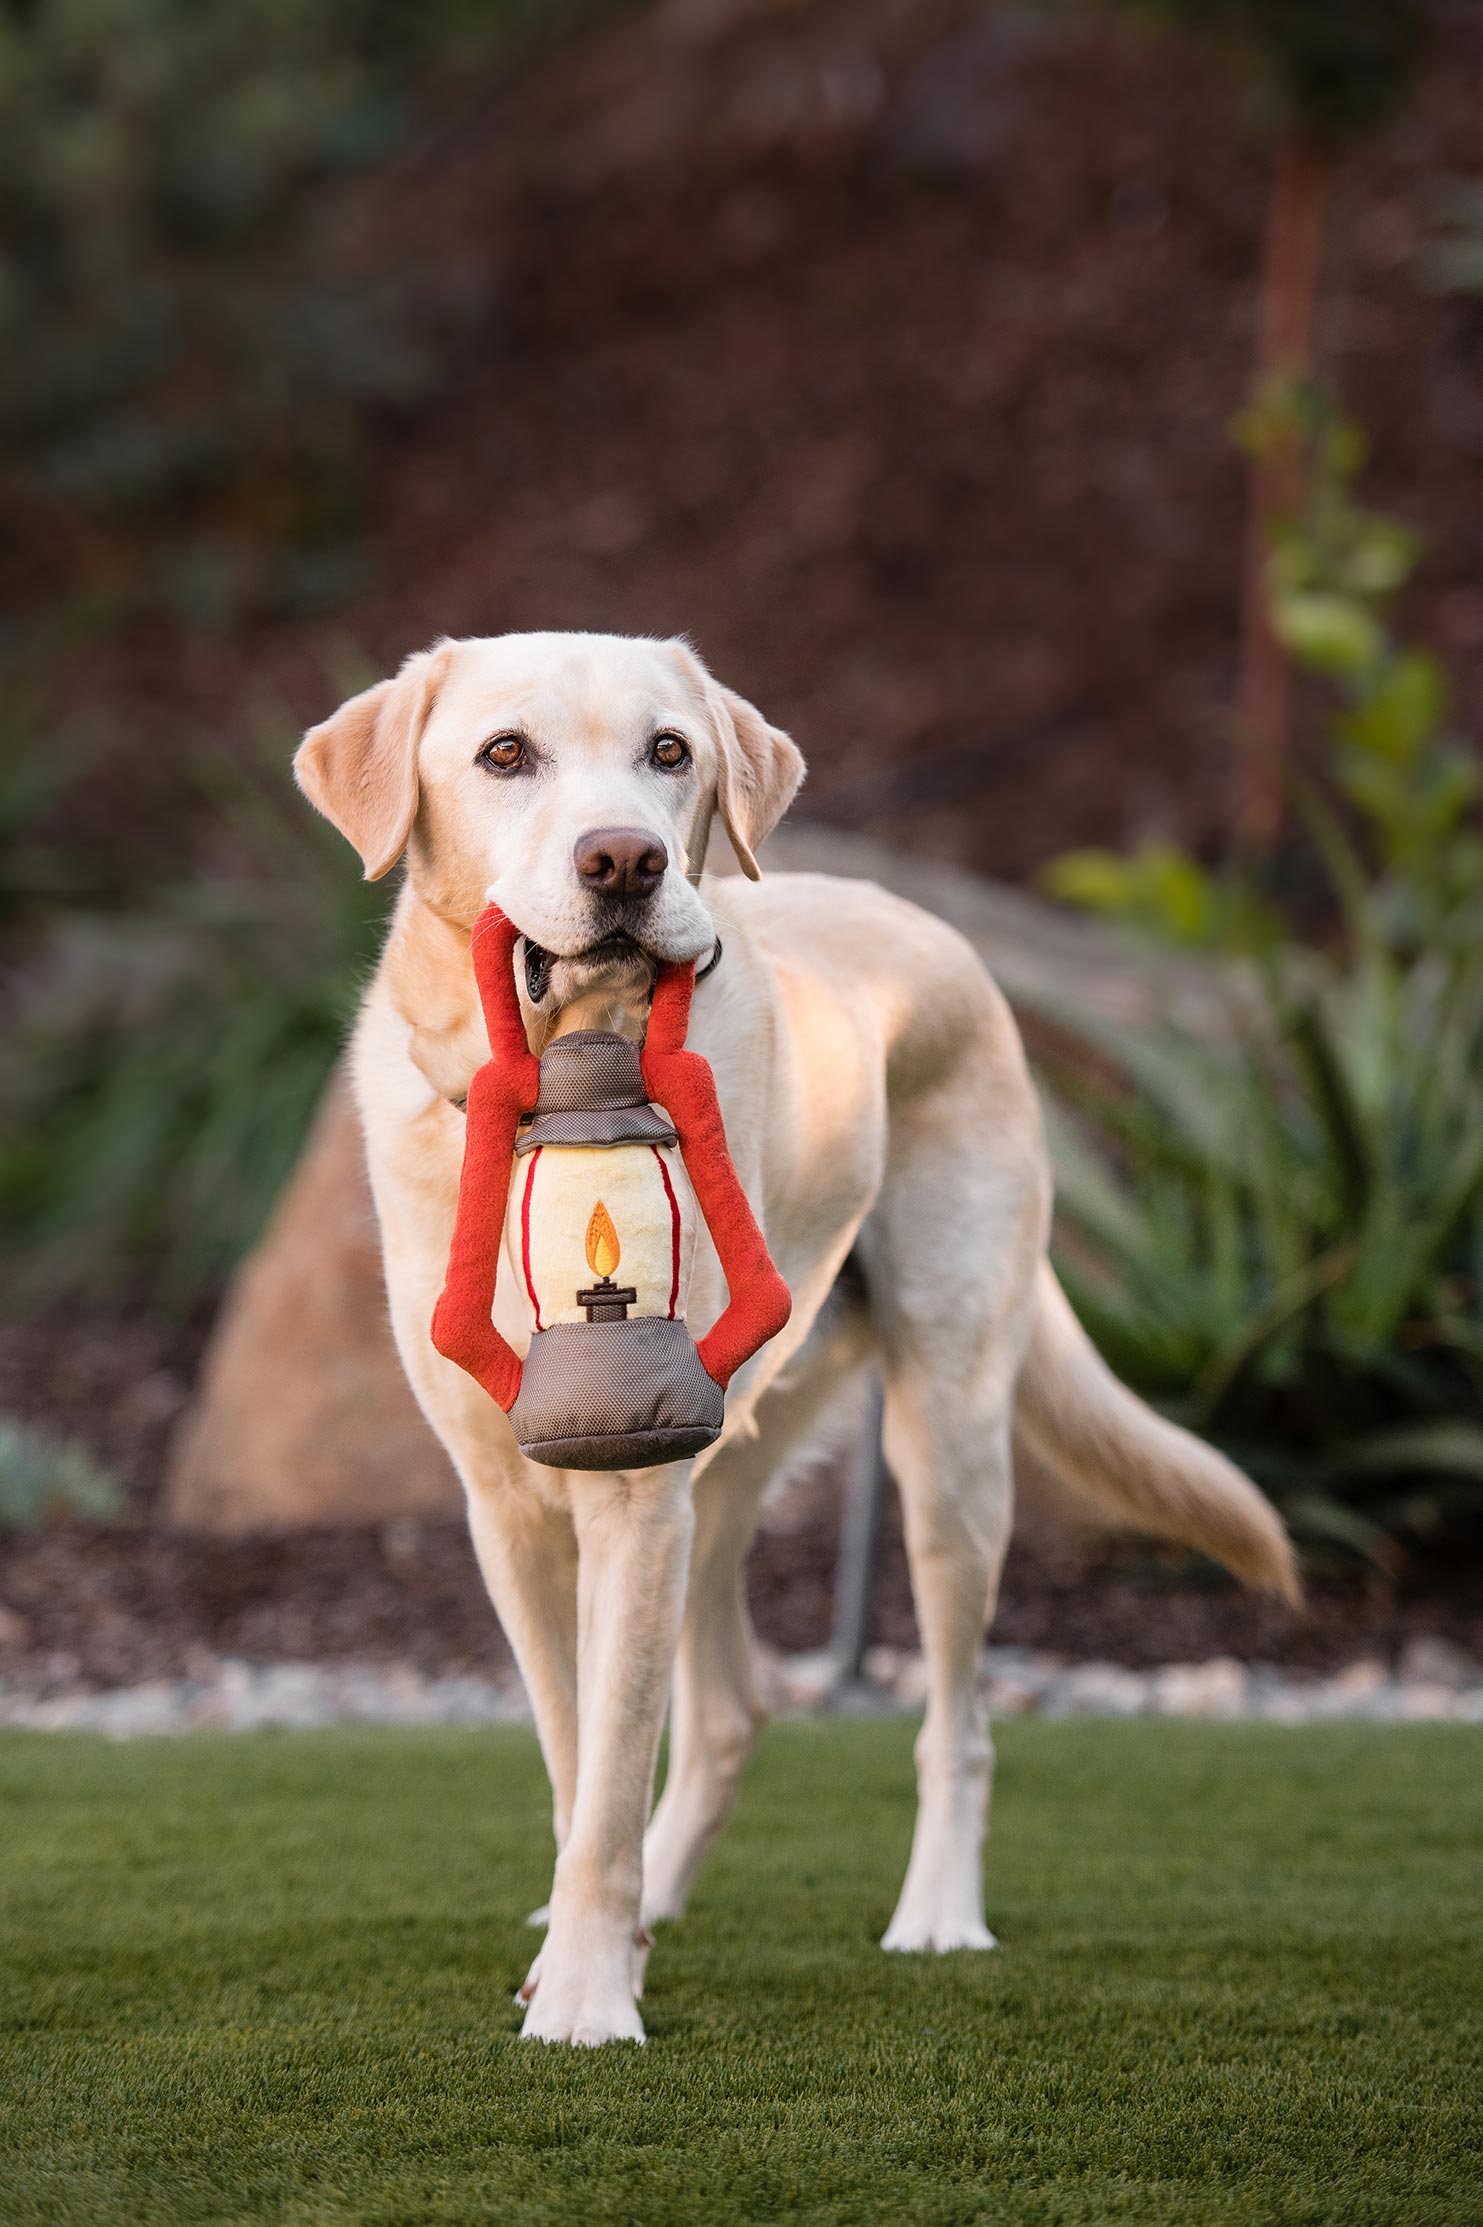 Camp Corbin Squeaky Plush Dog toys, Pack Leader Lantern